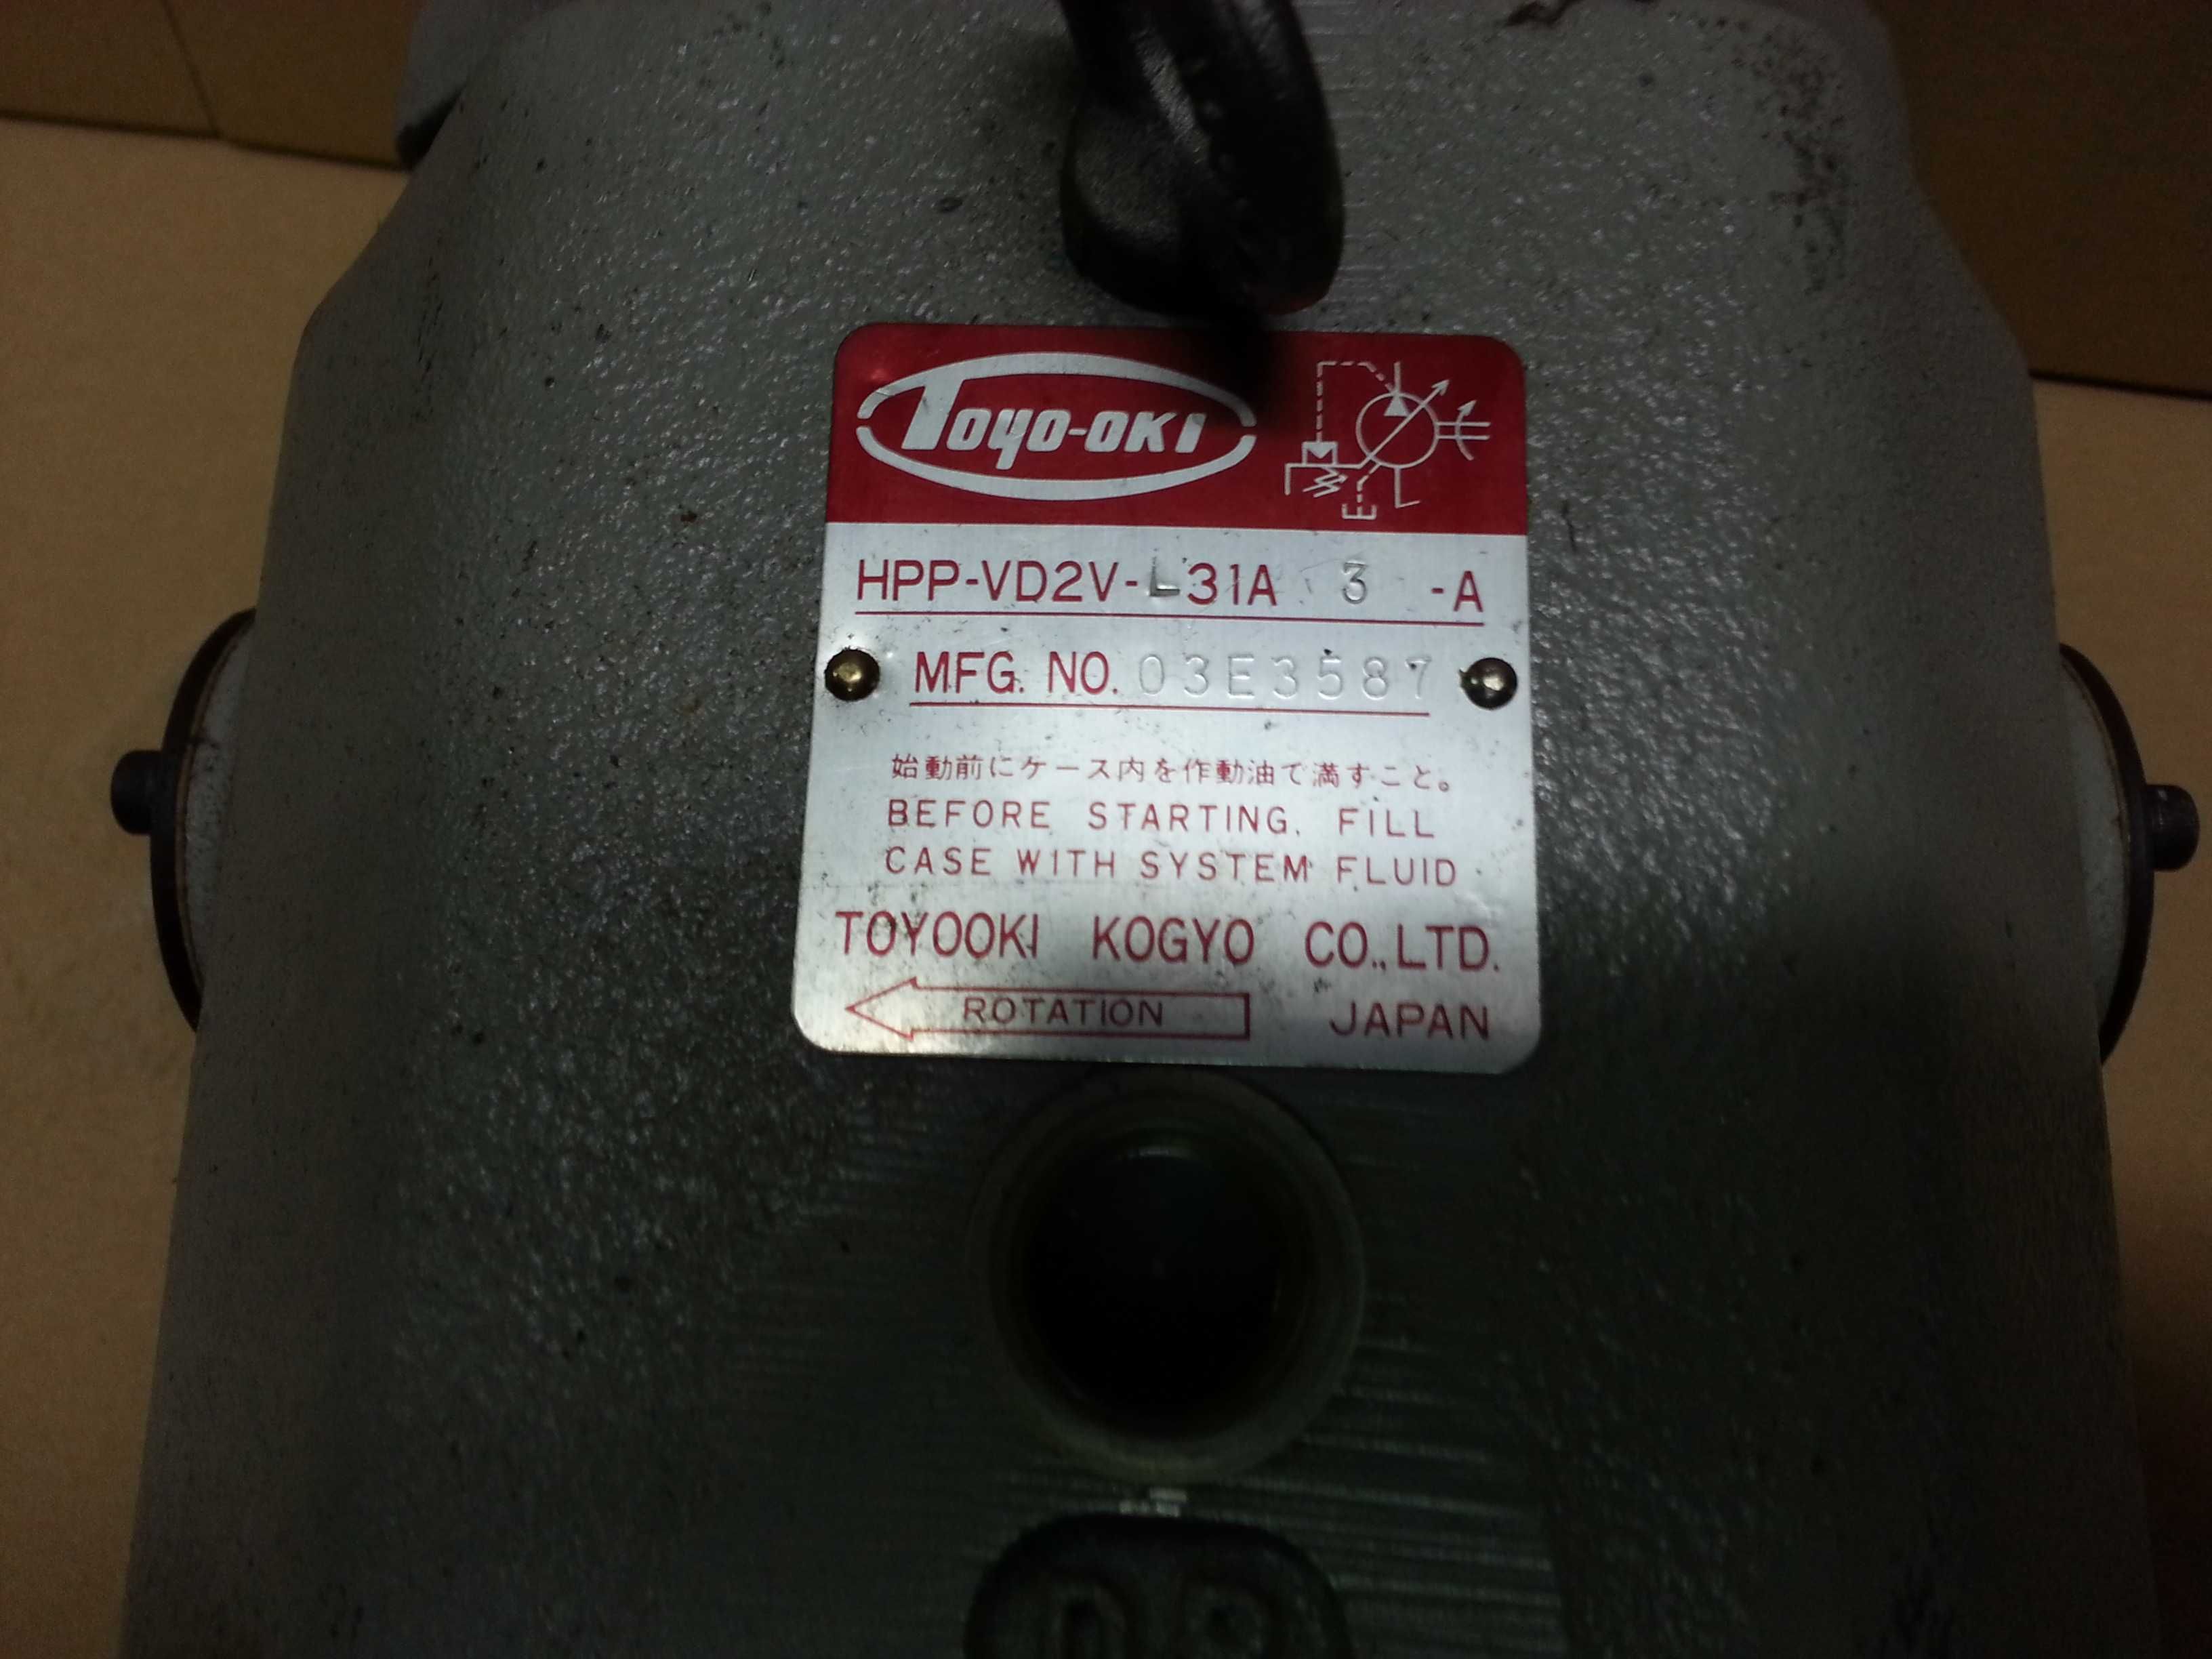 Pompa hydrauliczna TOYO-OKI HPP-VD2V-L31A3 70 bar